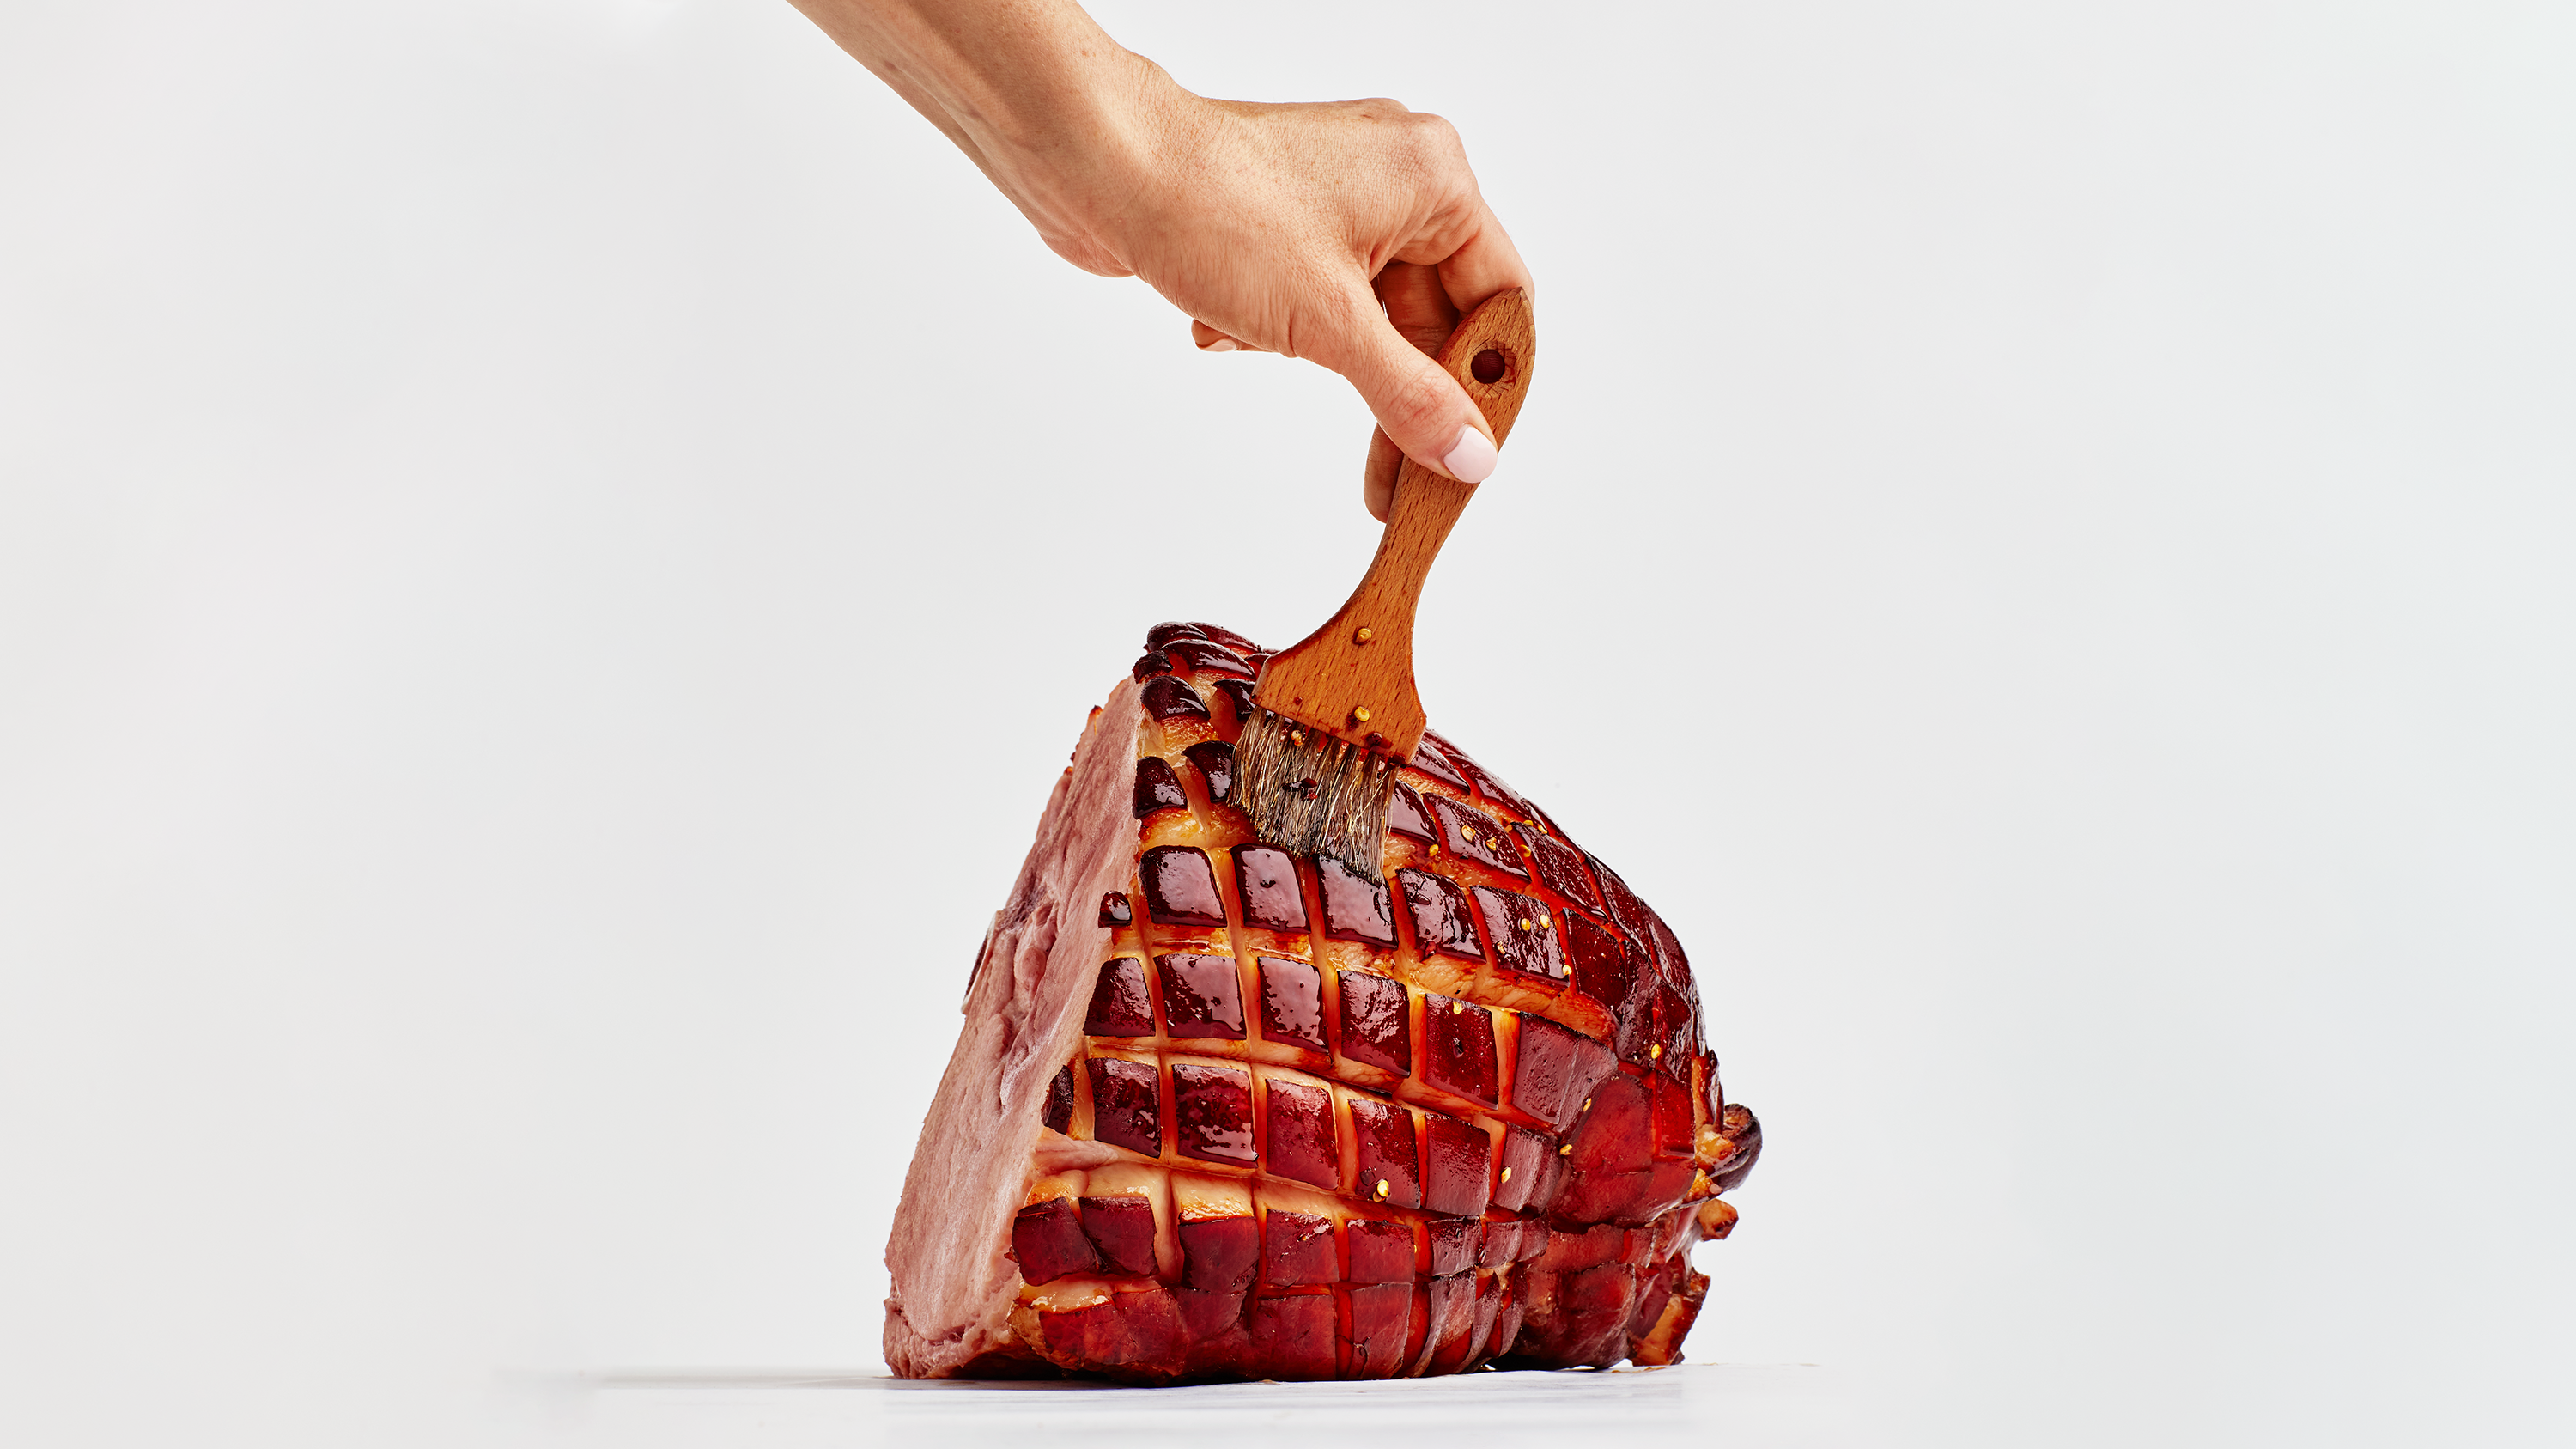 Is ham healthier than beef?